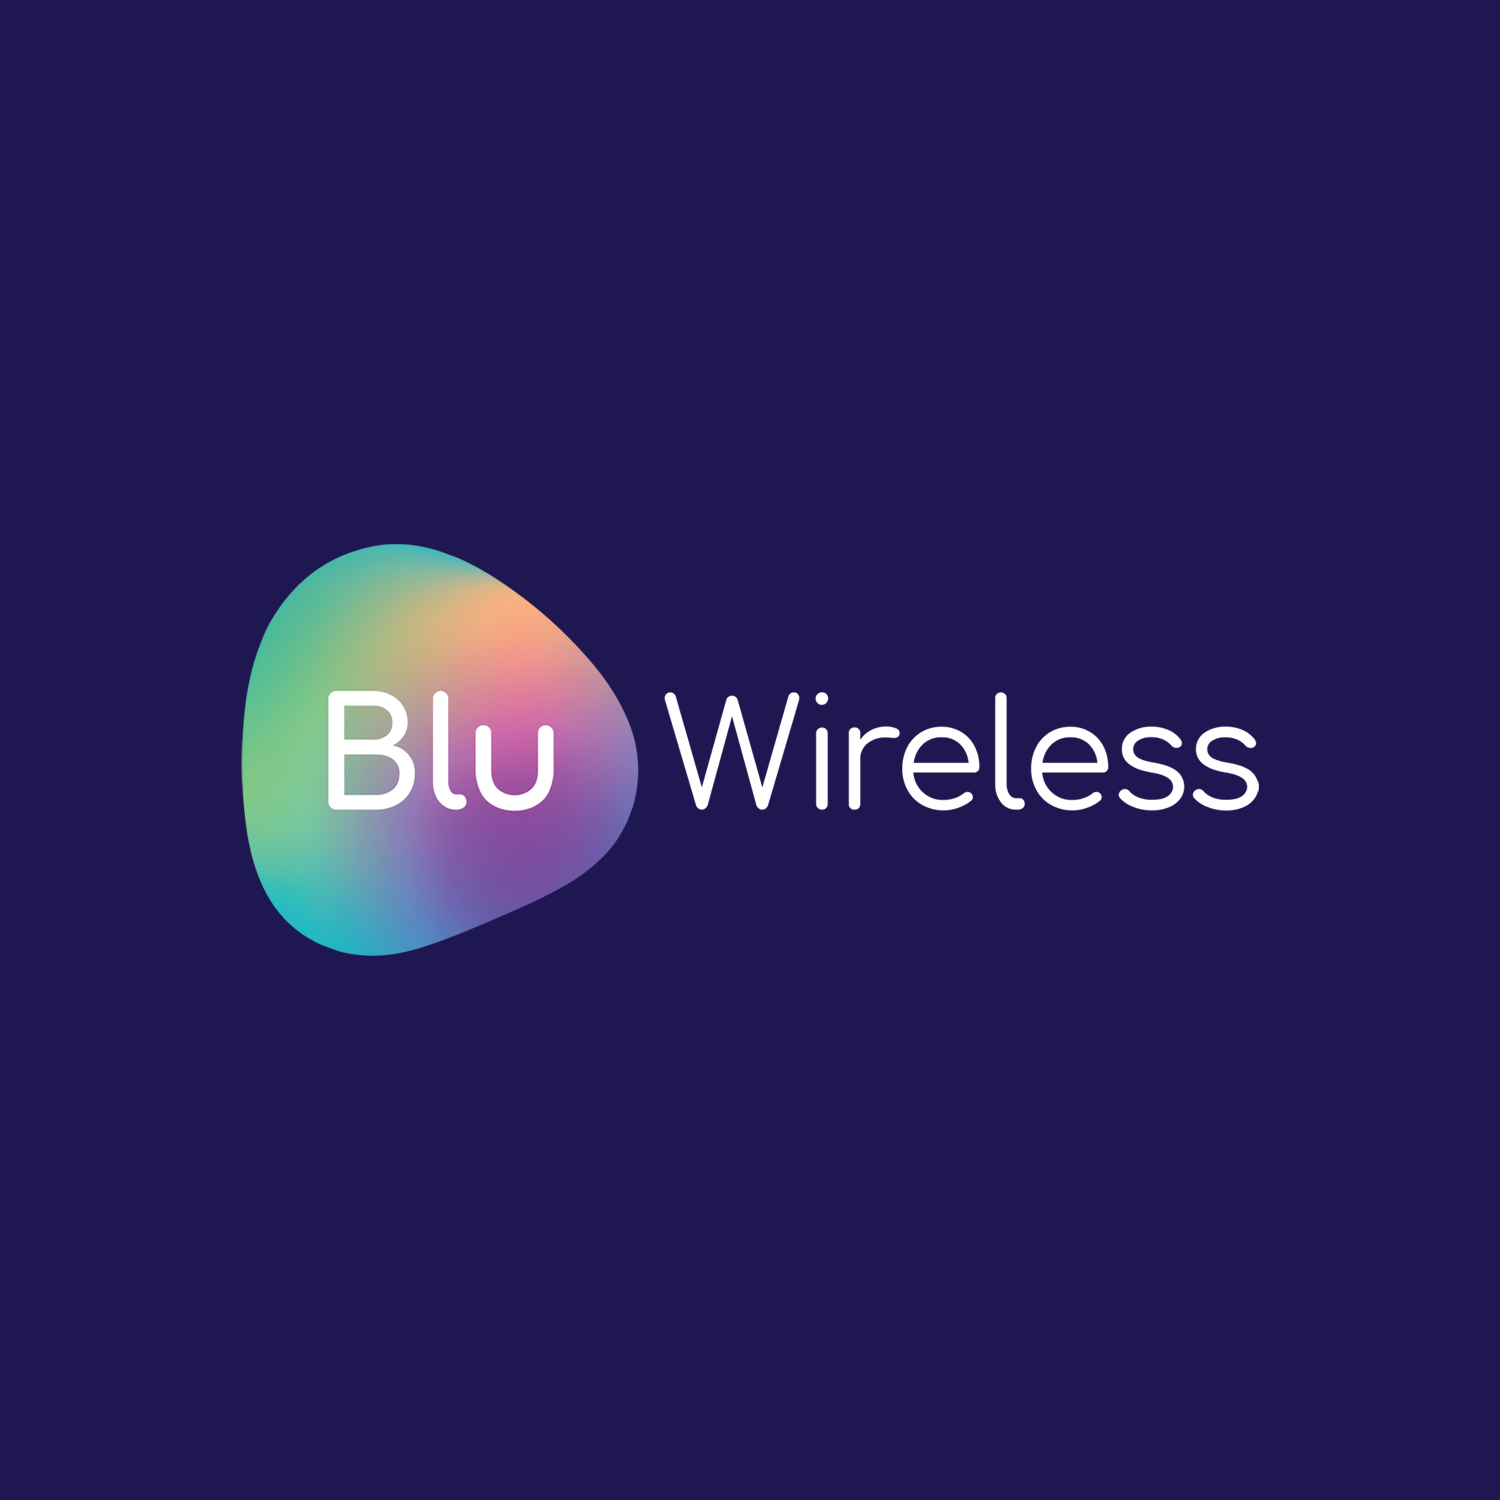 Blu Wireless Creating cutting edge wireless technology 